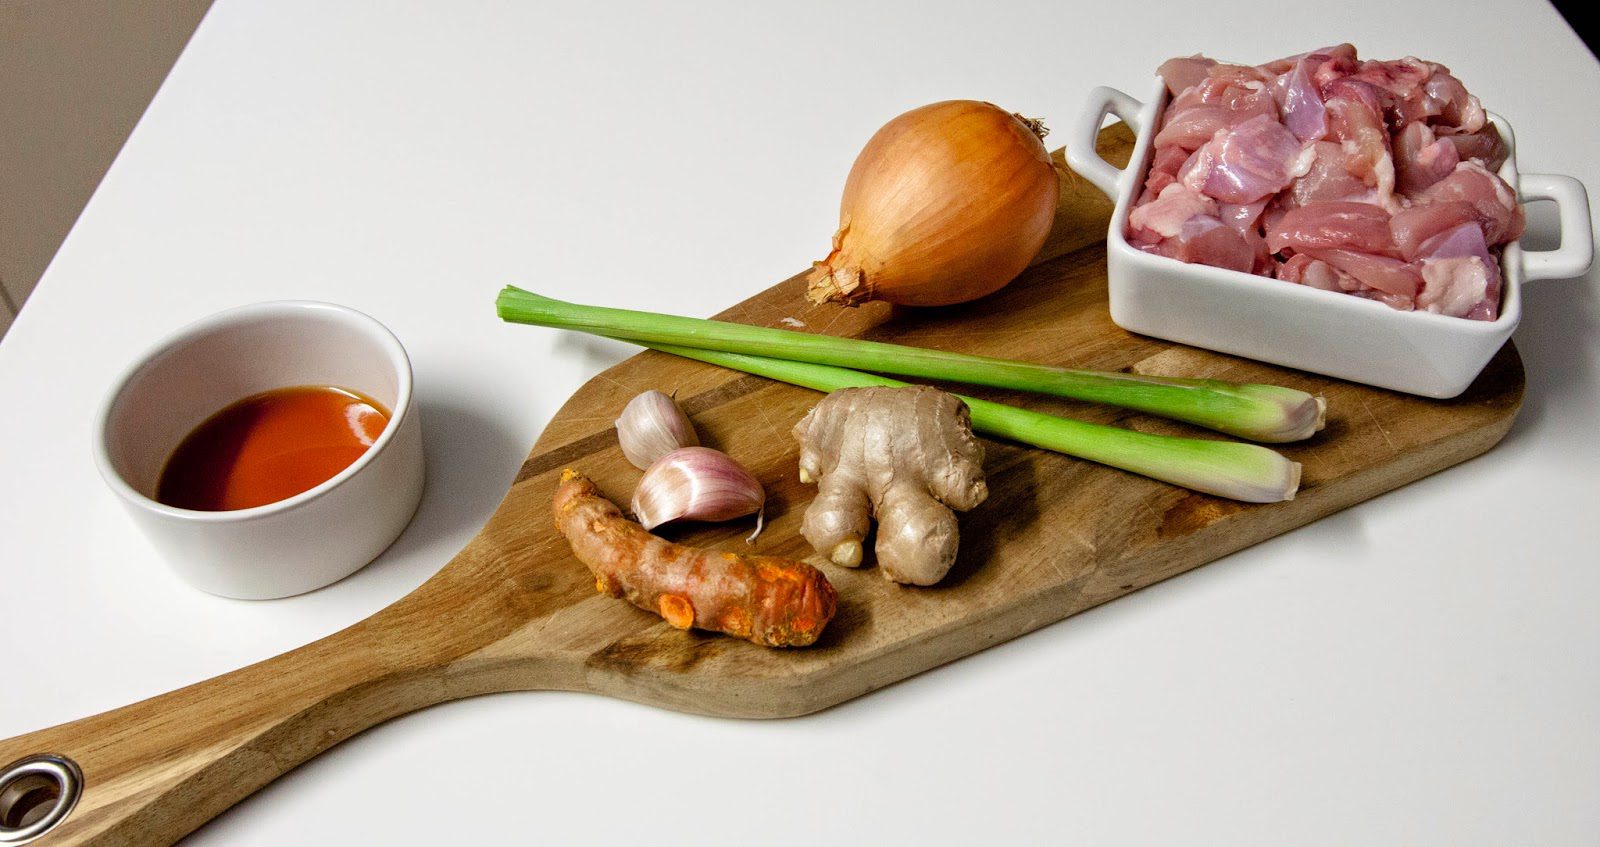 Ingredients for Vietnamese lemongrass, ginger and turmeric chicken paleo